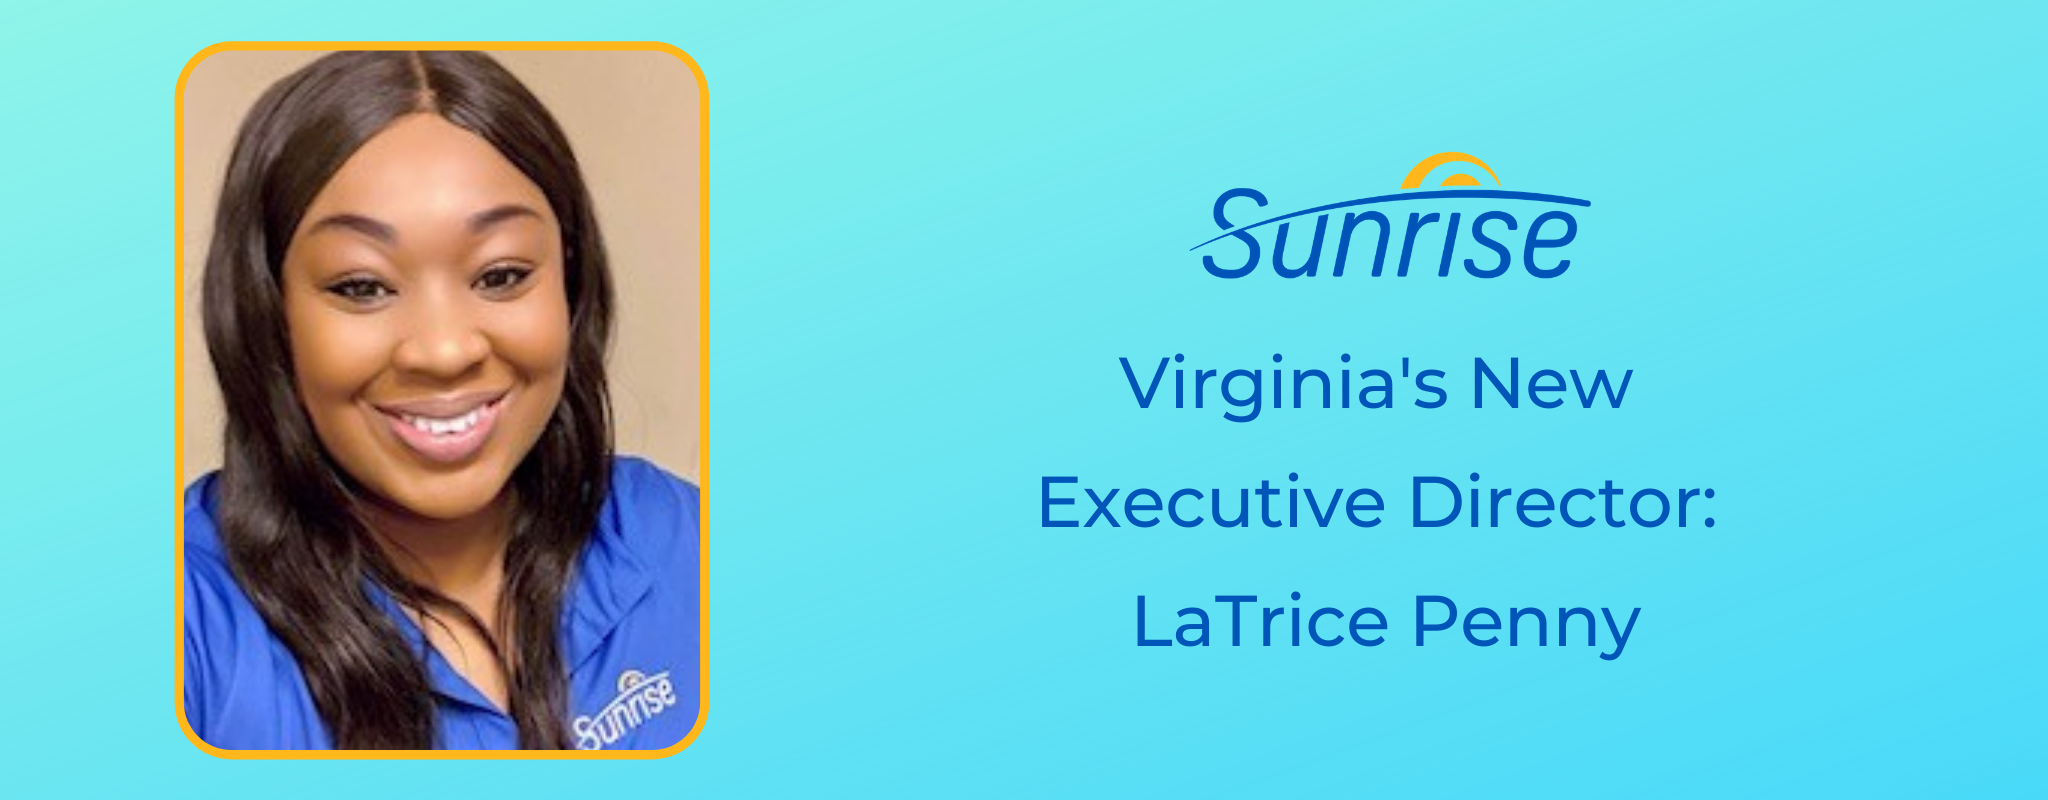 Virginia’s New Executive Director: LaTrice Penny